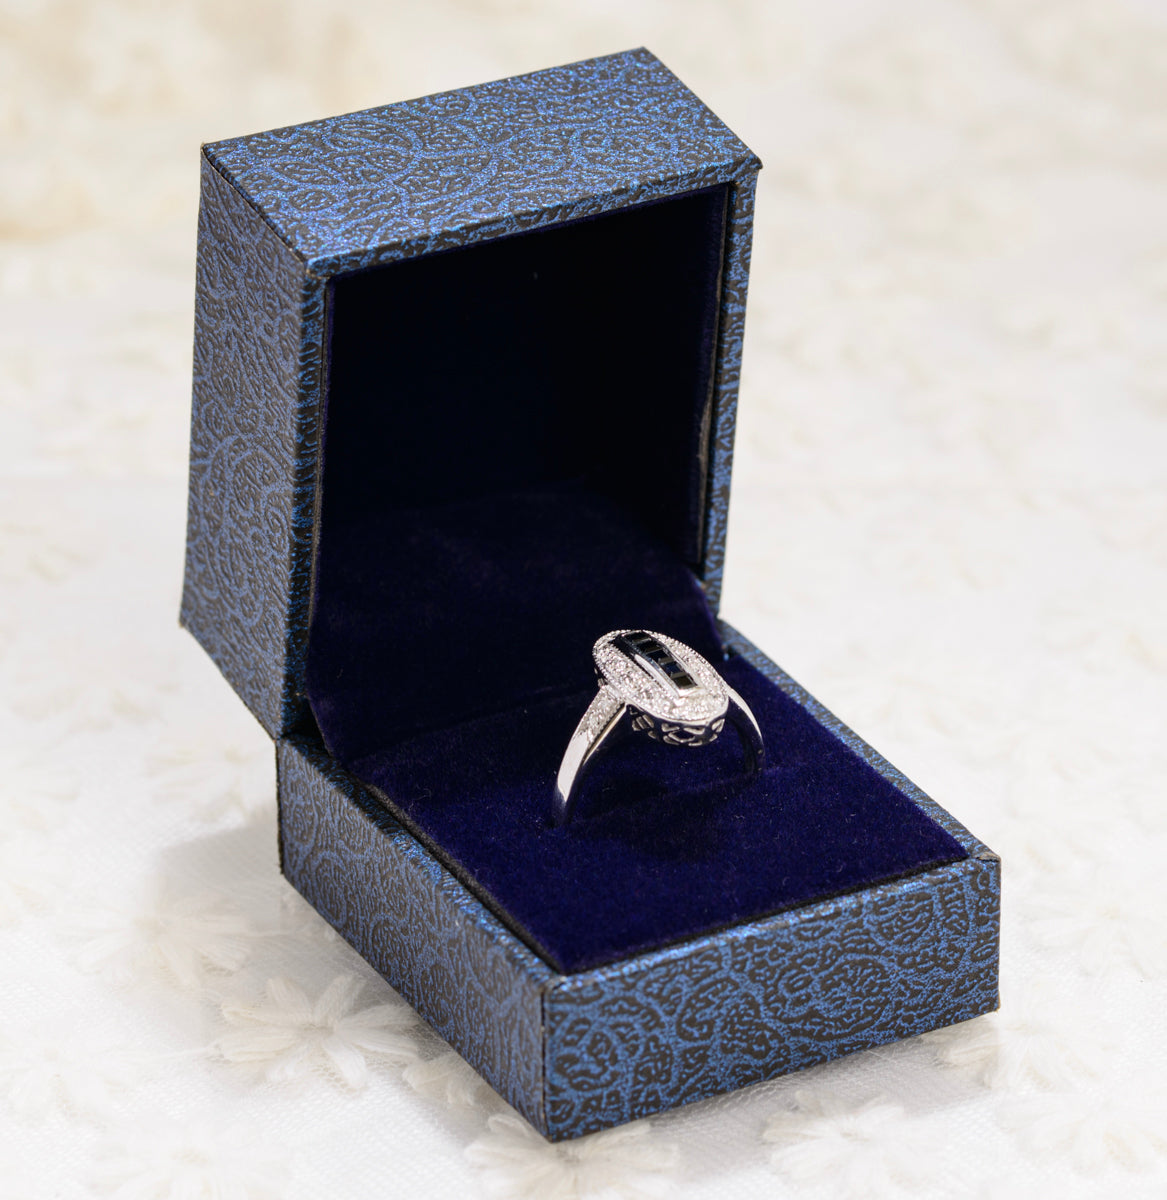 9ct White Gold Natural Sapphire & Diamond Ring Art Deco Design UK Size R In Presentation Box  (A1862)